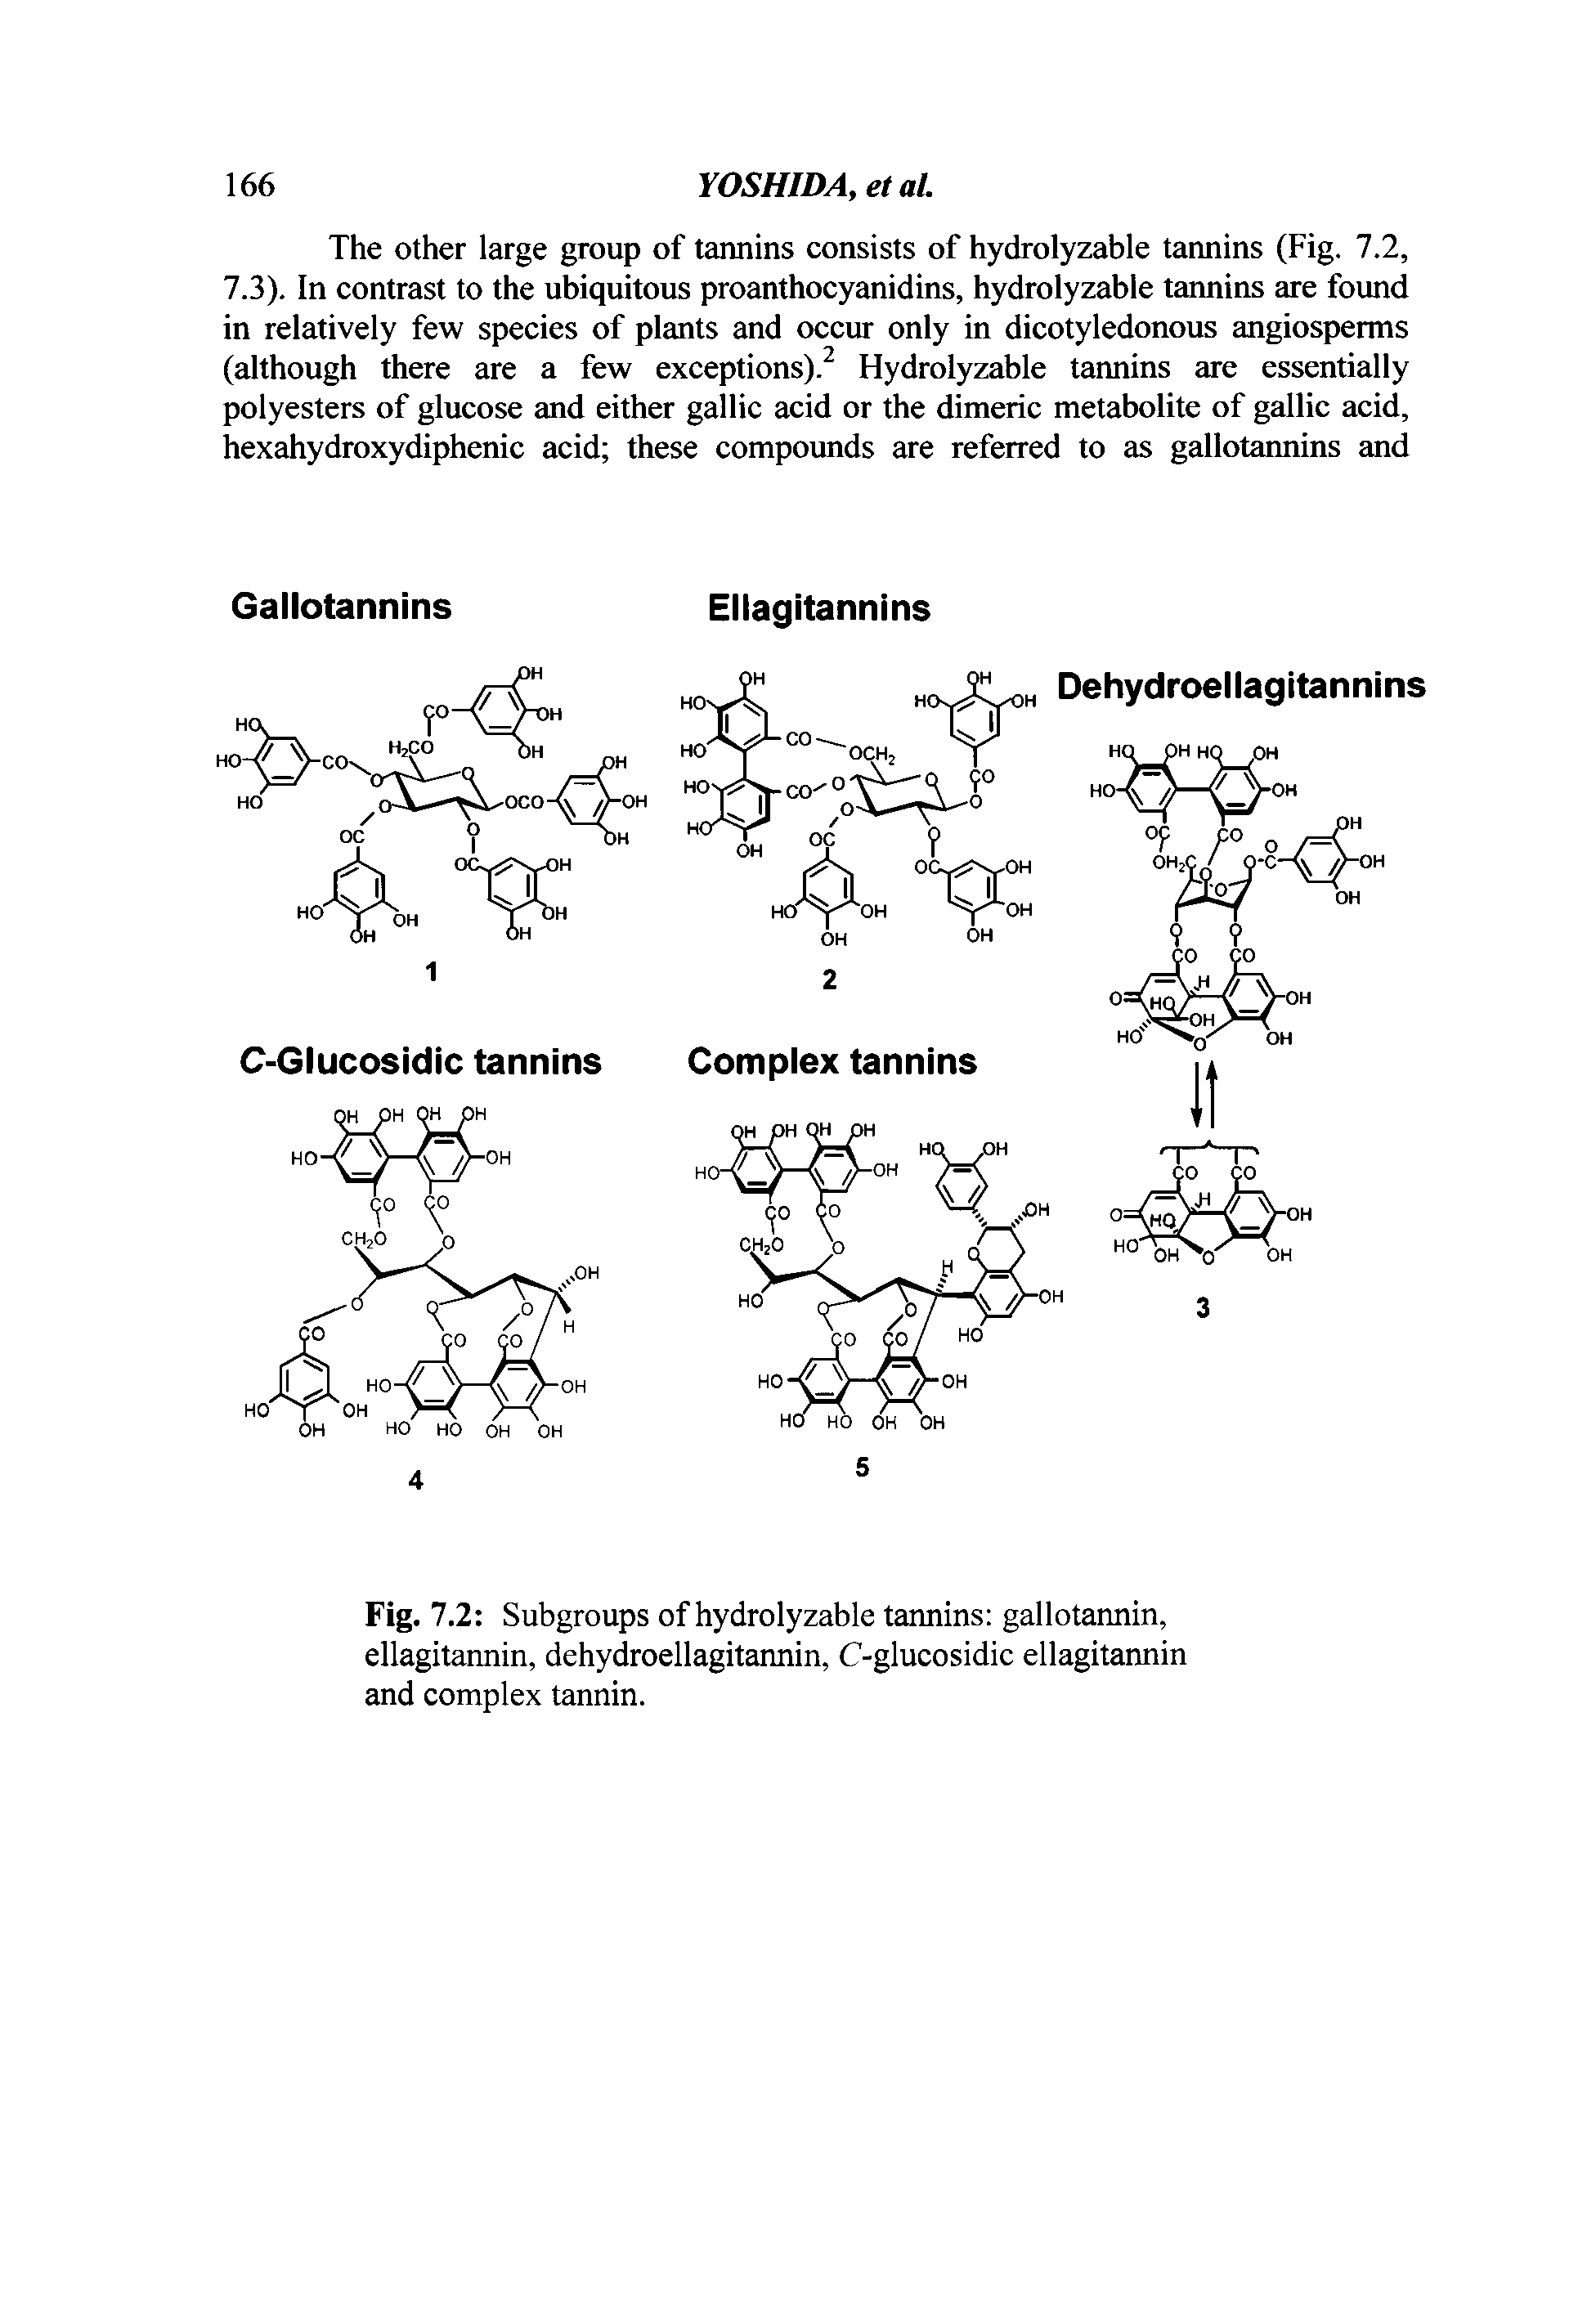 Fig. 7.2 Subgroups of hydrolyzable tannins gallotannin, ellagitannin, dehydroellagitannin, C-glucosidic ellagitannin and complex tannin.